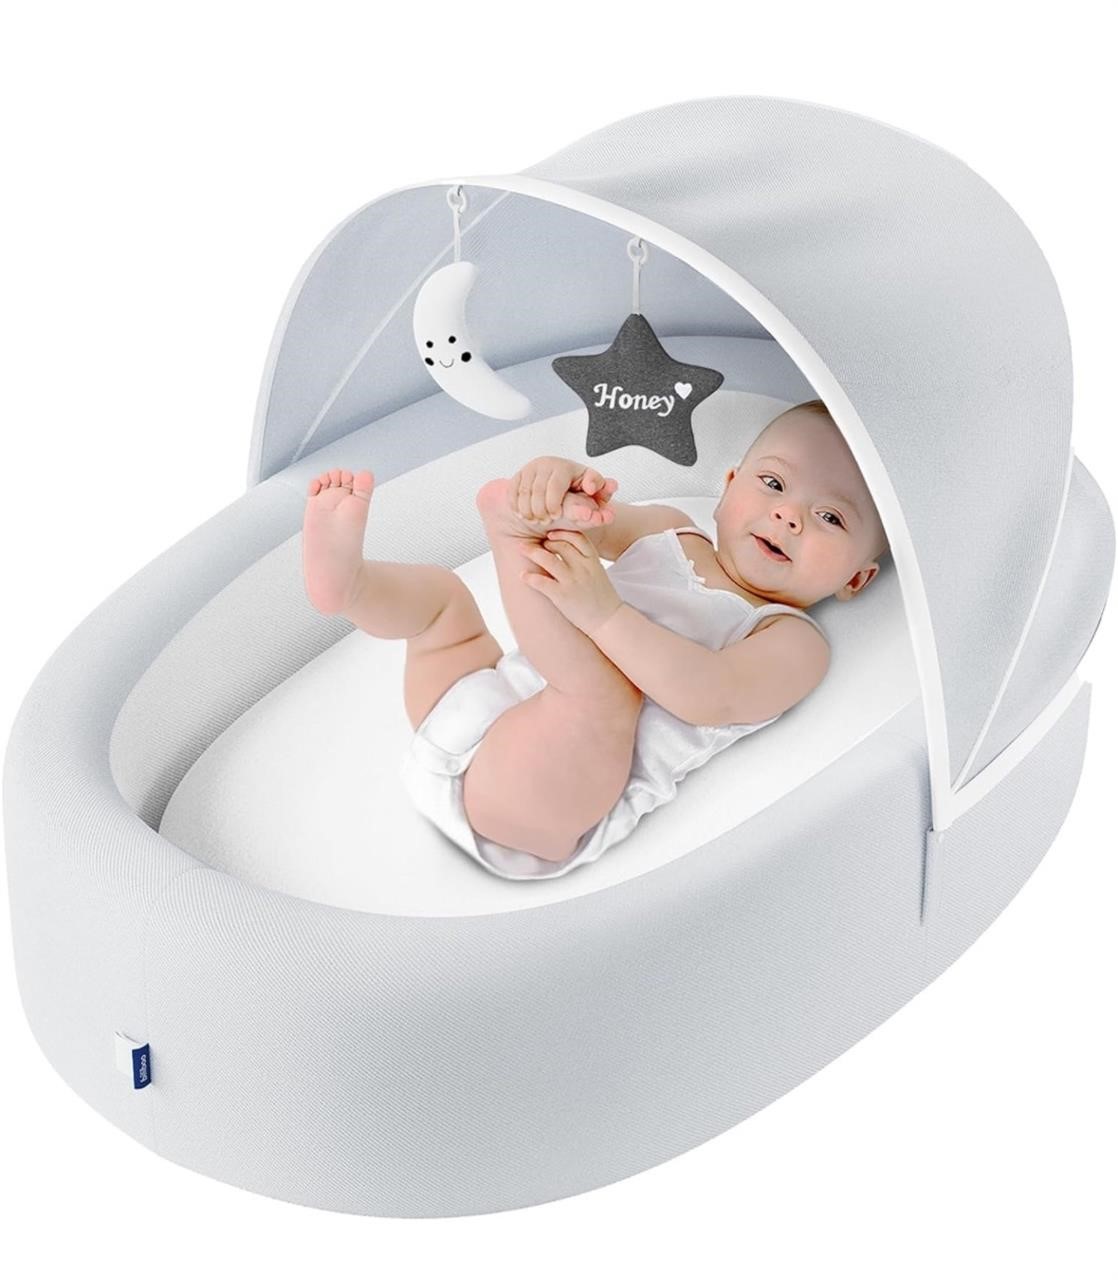 $110 Premium Baby Lounger for Newborn, Infant